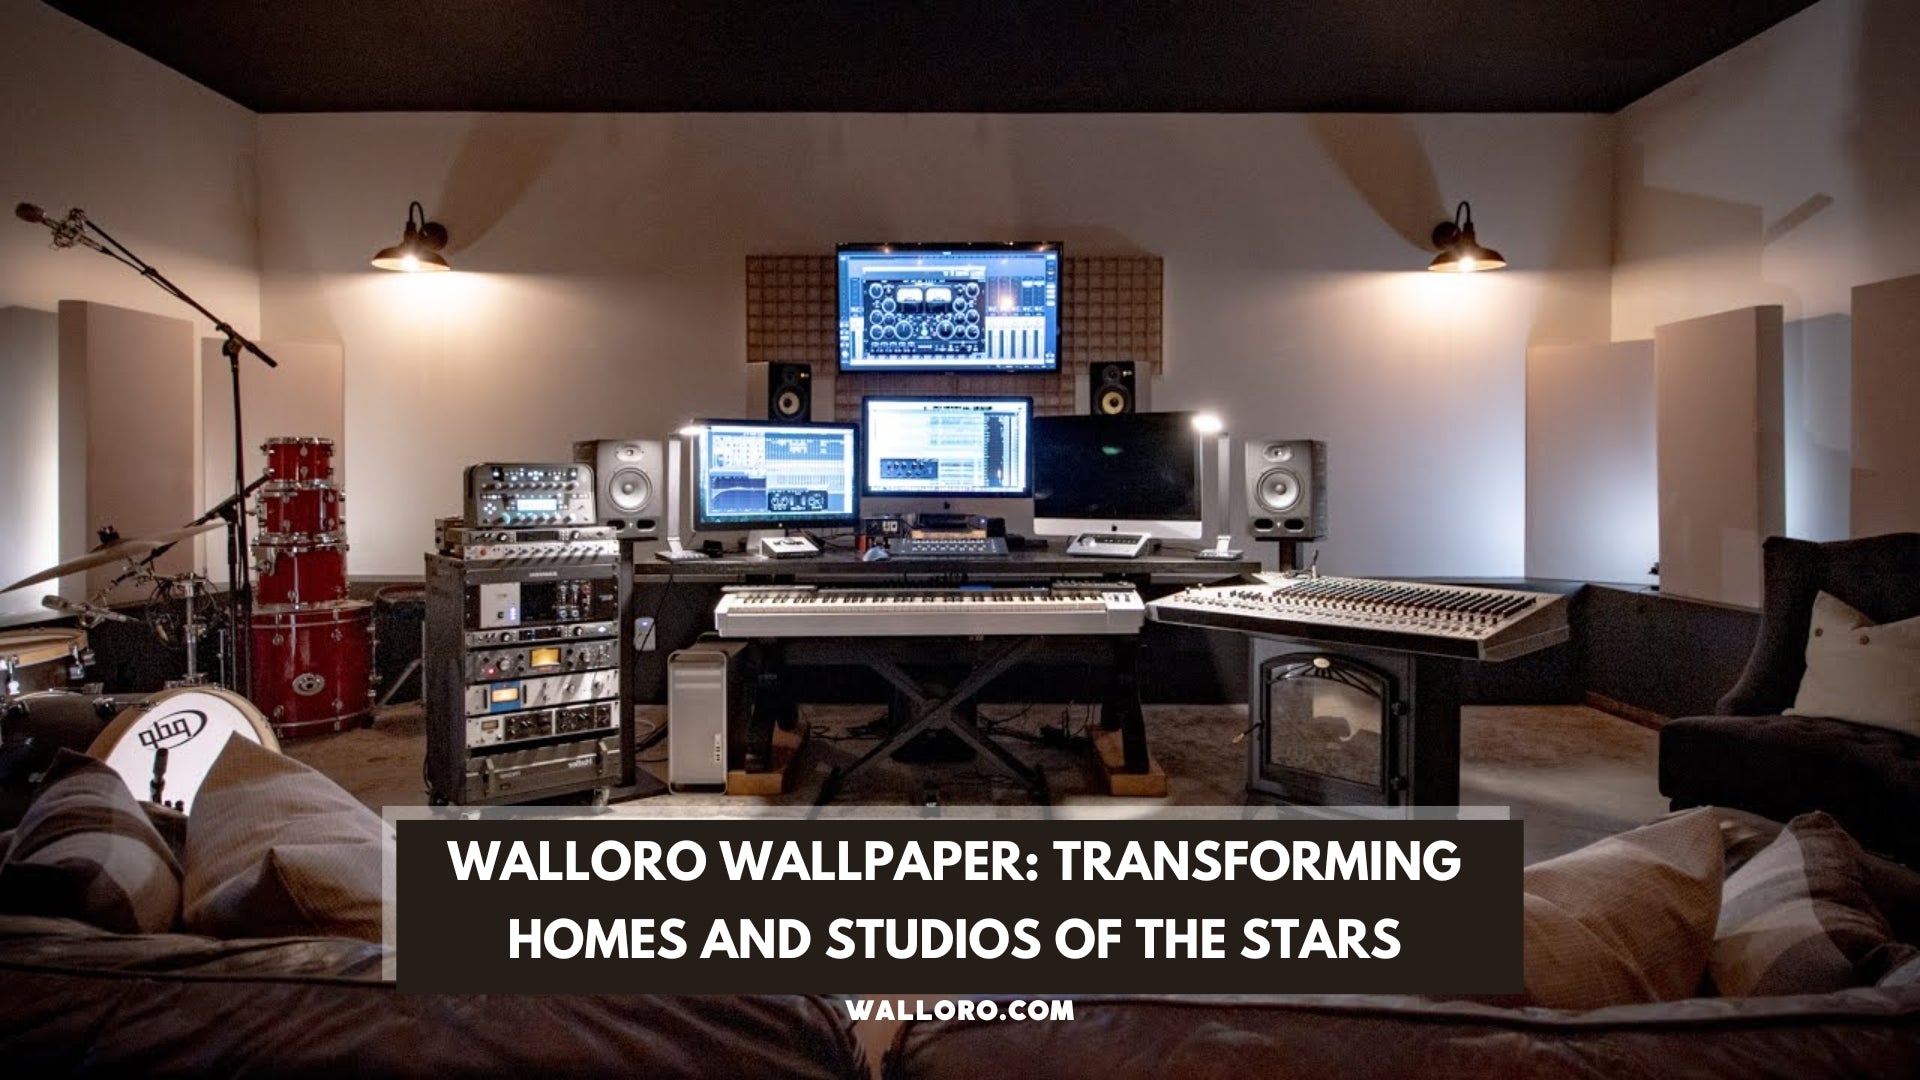 Walloro Wallpaper: Transforming Homes and Studios of the Stars